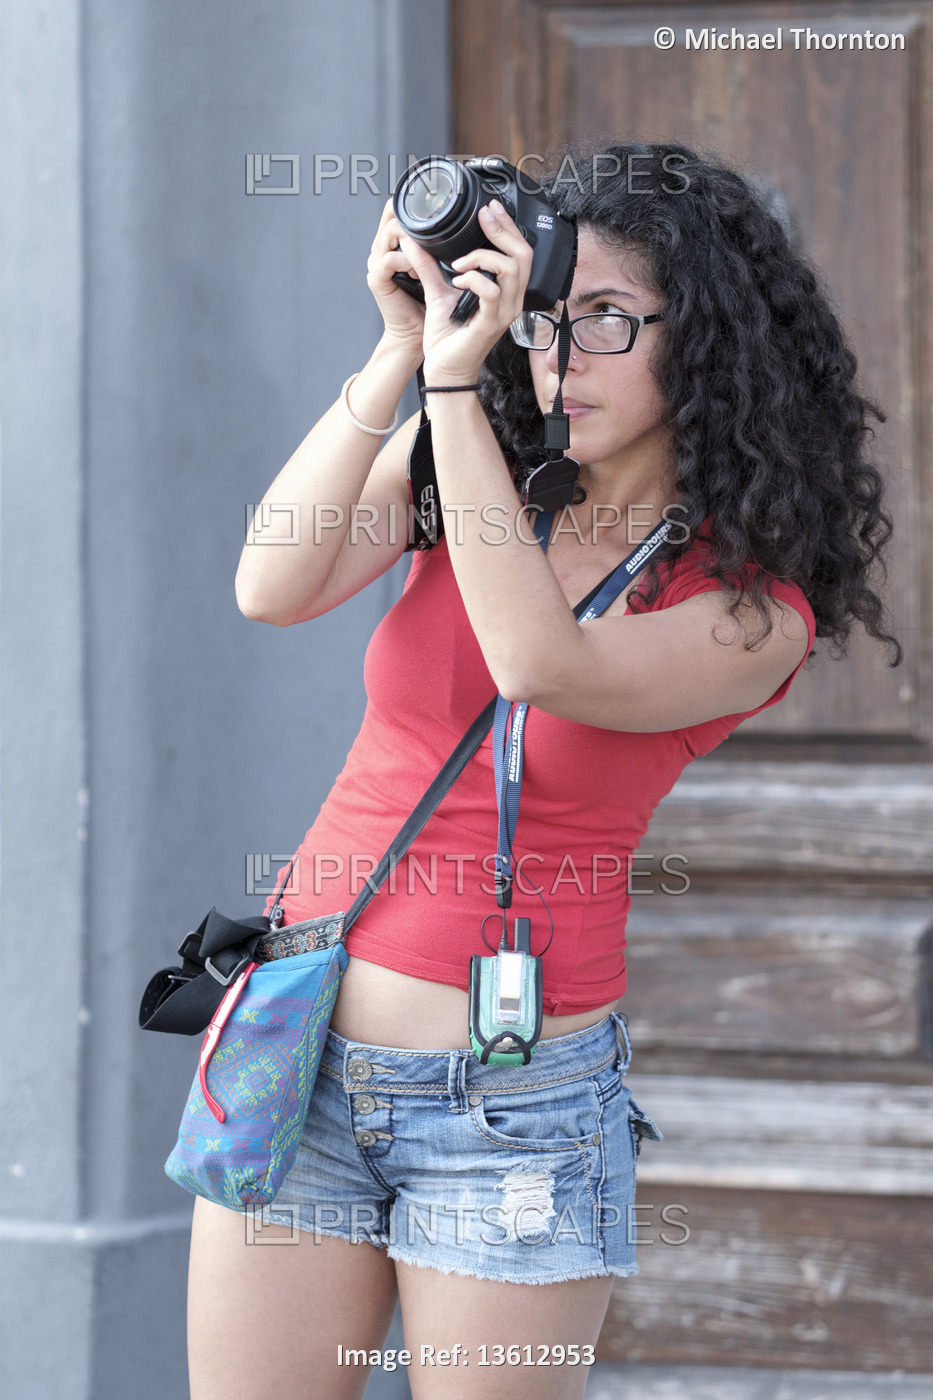 Young lady tourist taking holiday photographs, Pisa, Tuscany, Italy, Europe.